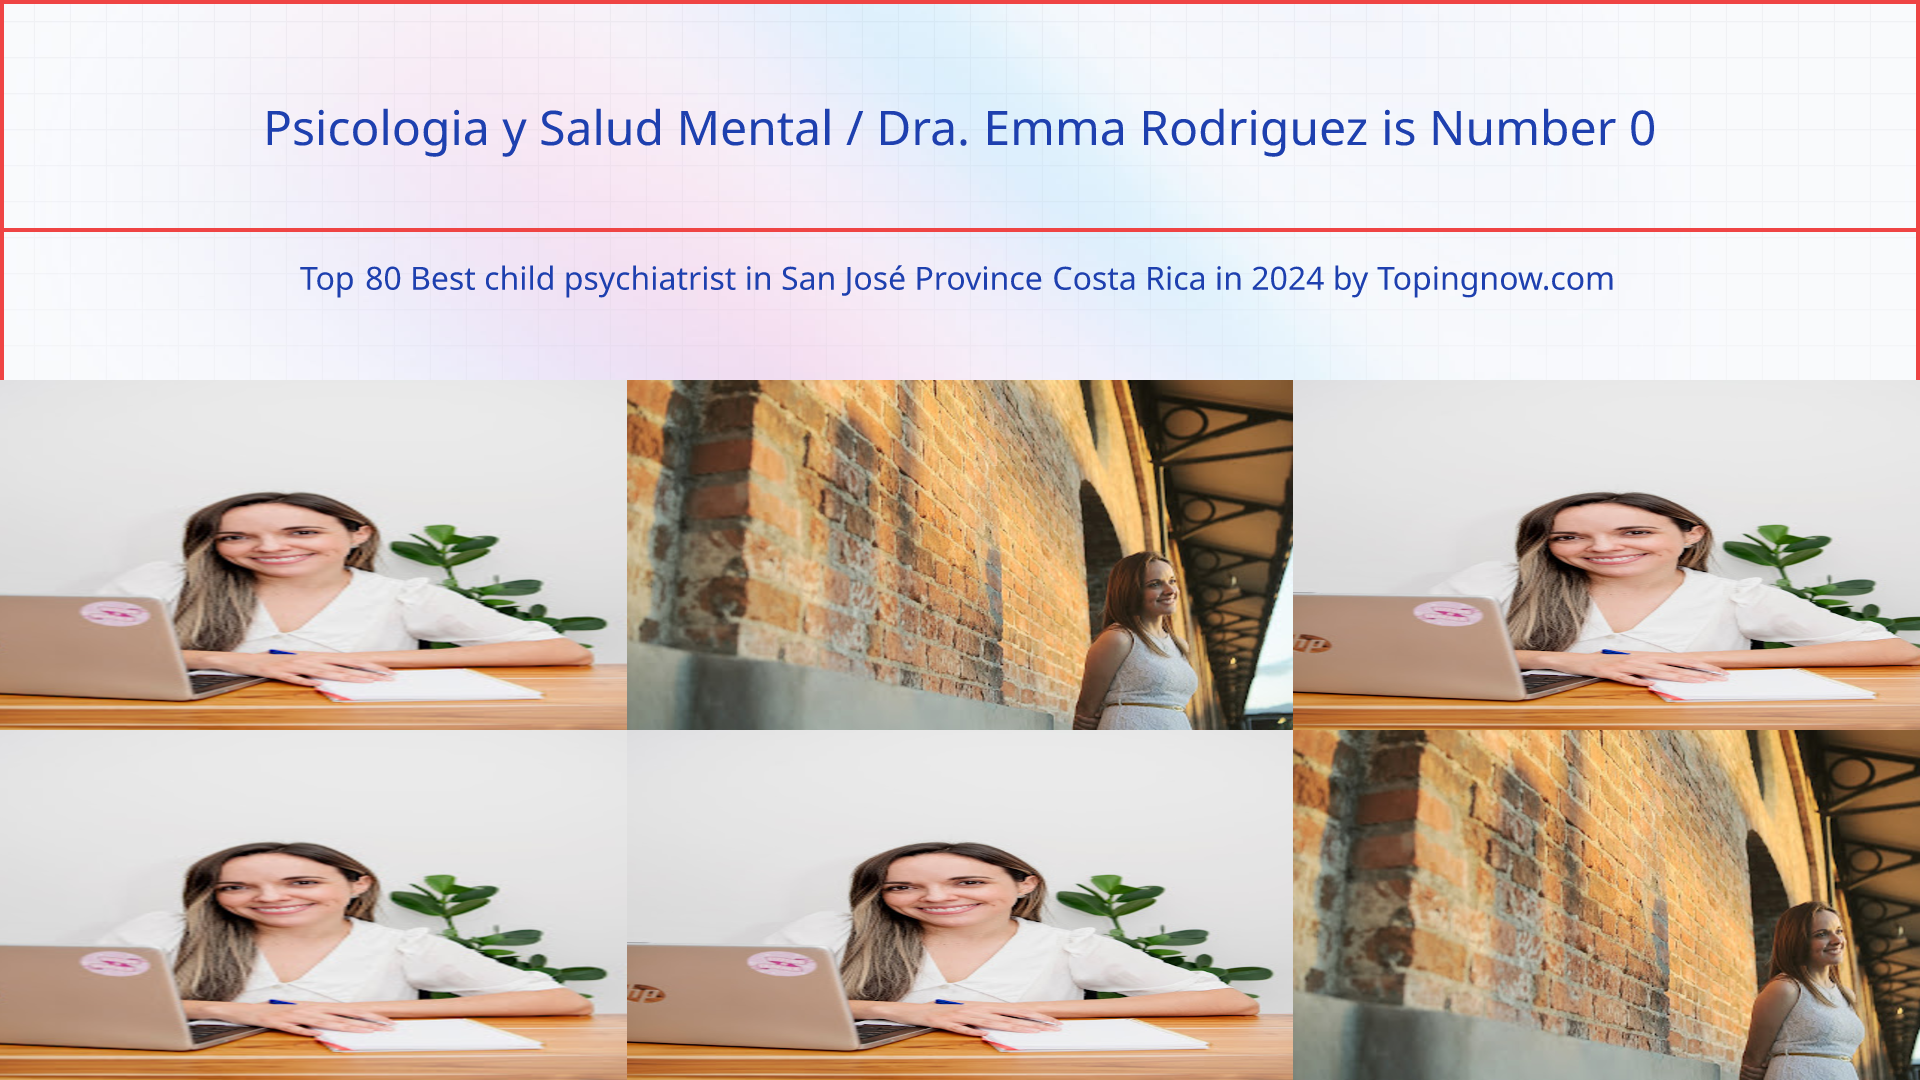 Psicologia y Salud Mental / Dra. Emma Rodriguez: Top 80 Best child psychiatrist in San José Province Costa Rica in 2024